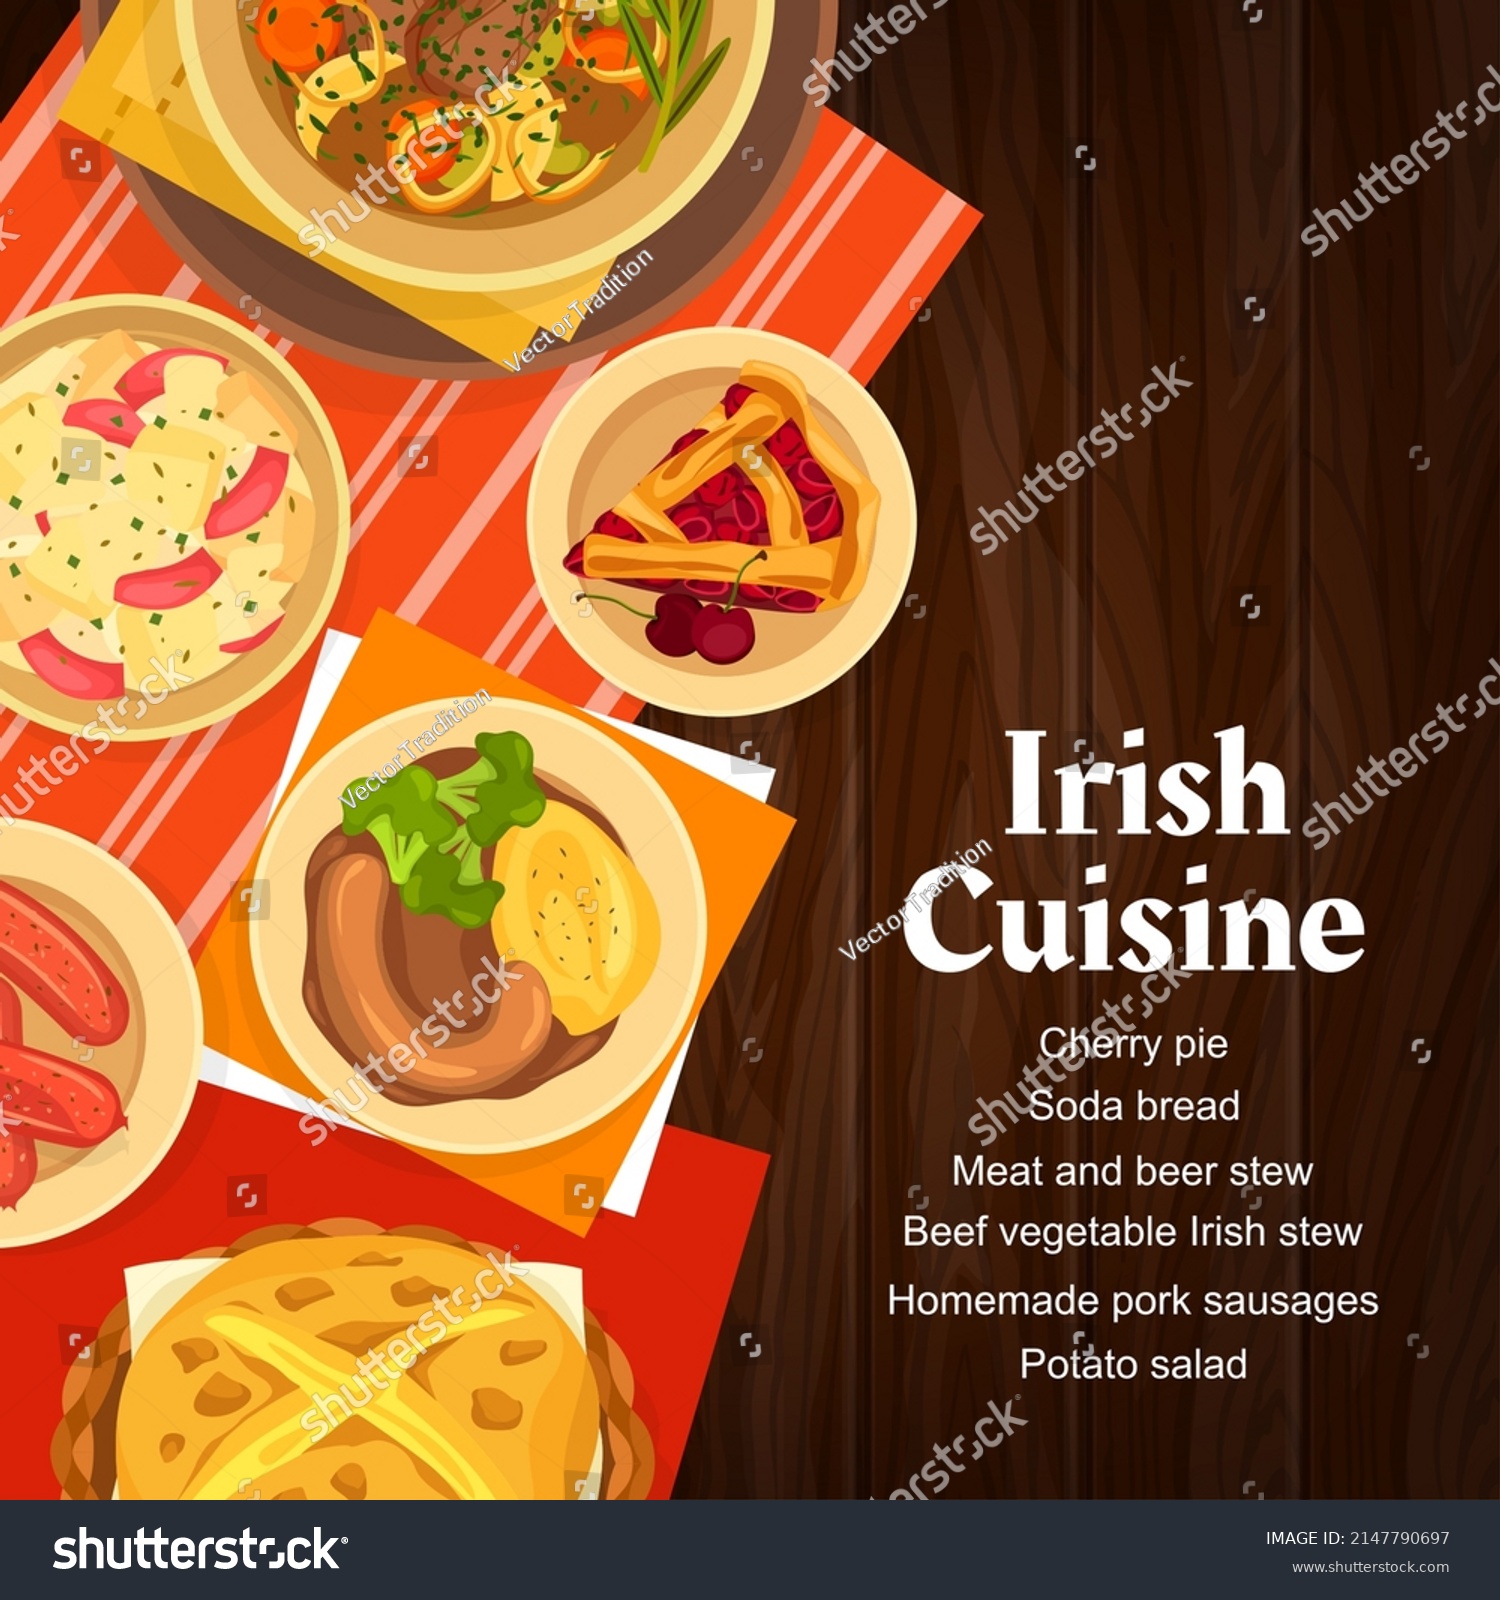 SVG of Irish cuisine restaurant meat, dessert meals menu cover. Potato salad, homemade pork sausages and cherry pie, beef vegetable Irish stew, Boxty pancake and soda bread vector. Irish food dishes banner svg